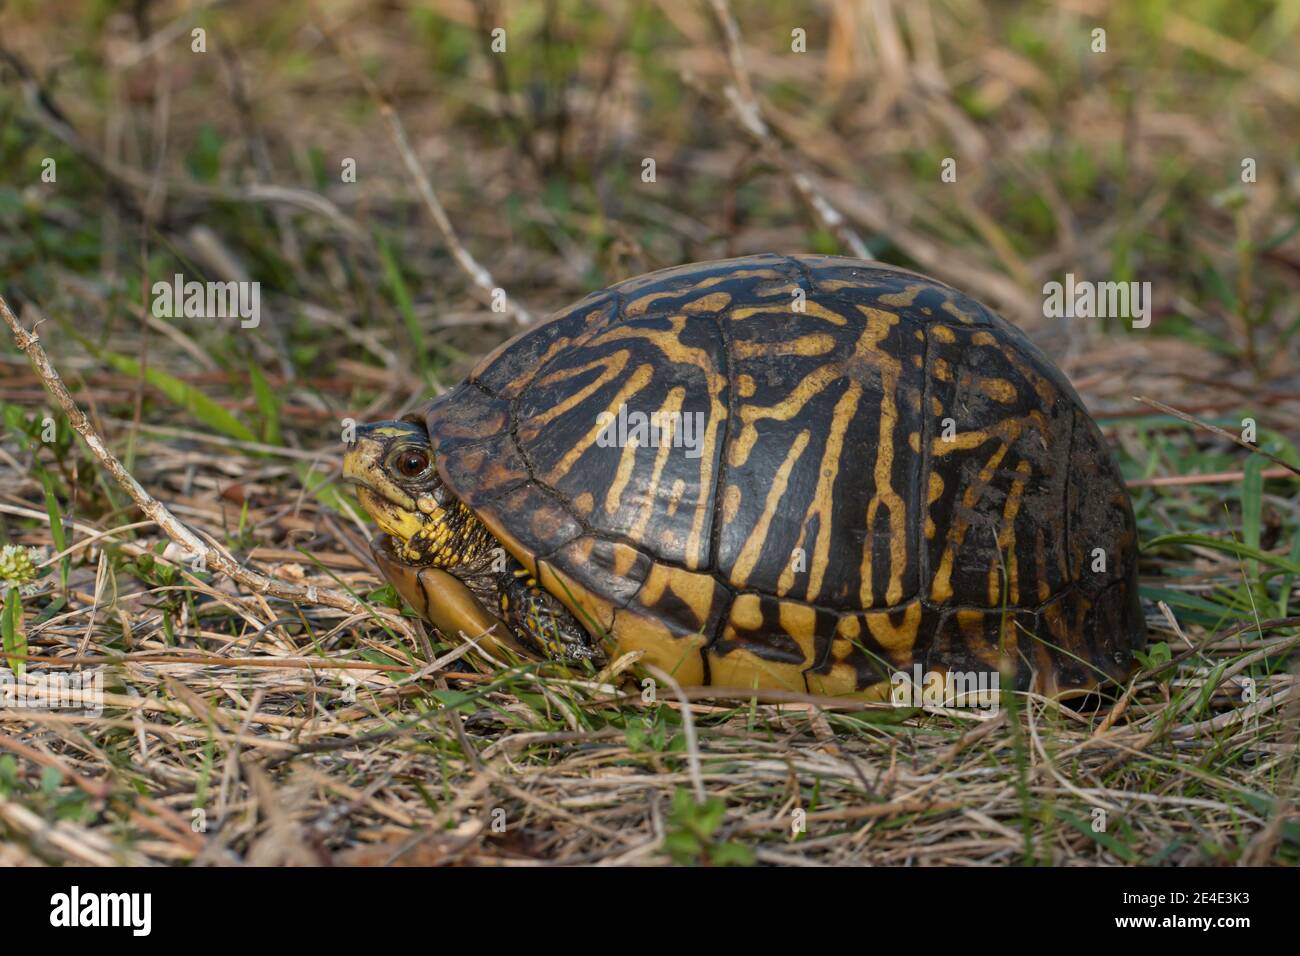 Florida box turtle - Terrapene carolina bauri Stock Photo